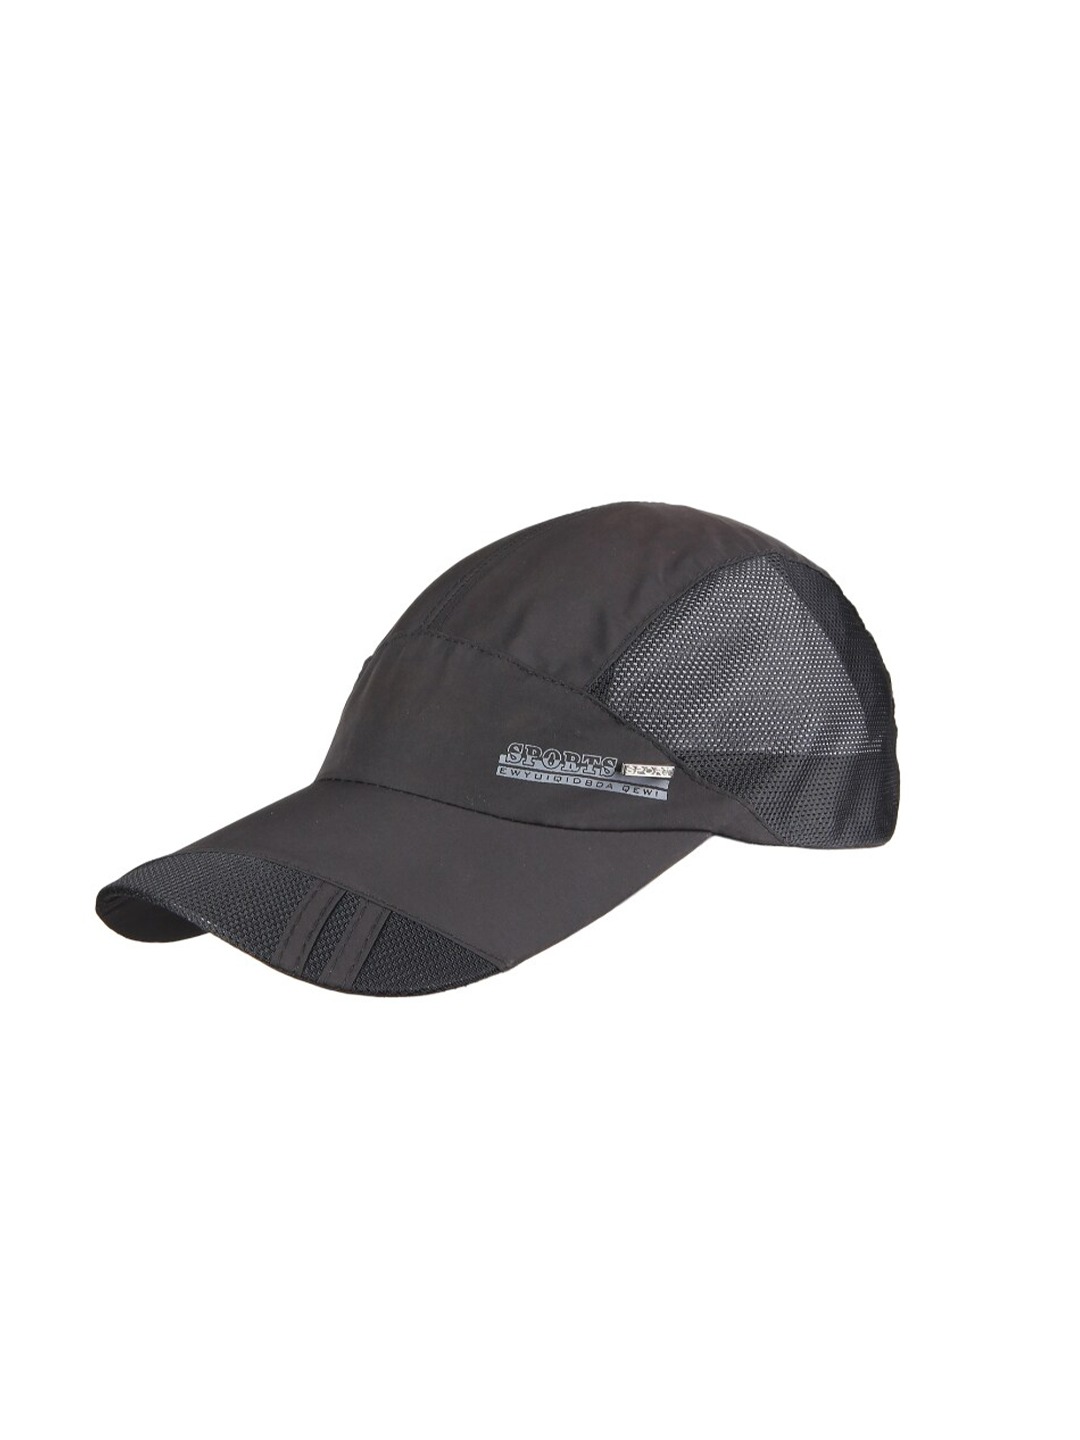 Accessories Caps | iSWEVEN Unisex Black Snapback Cap - WJ98081